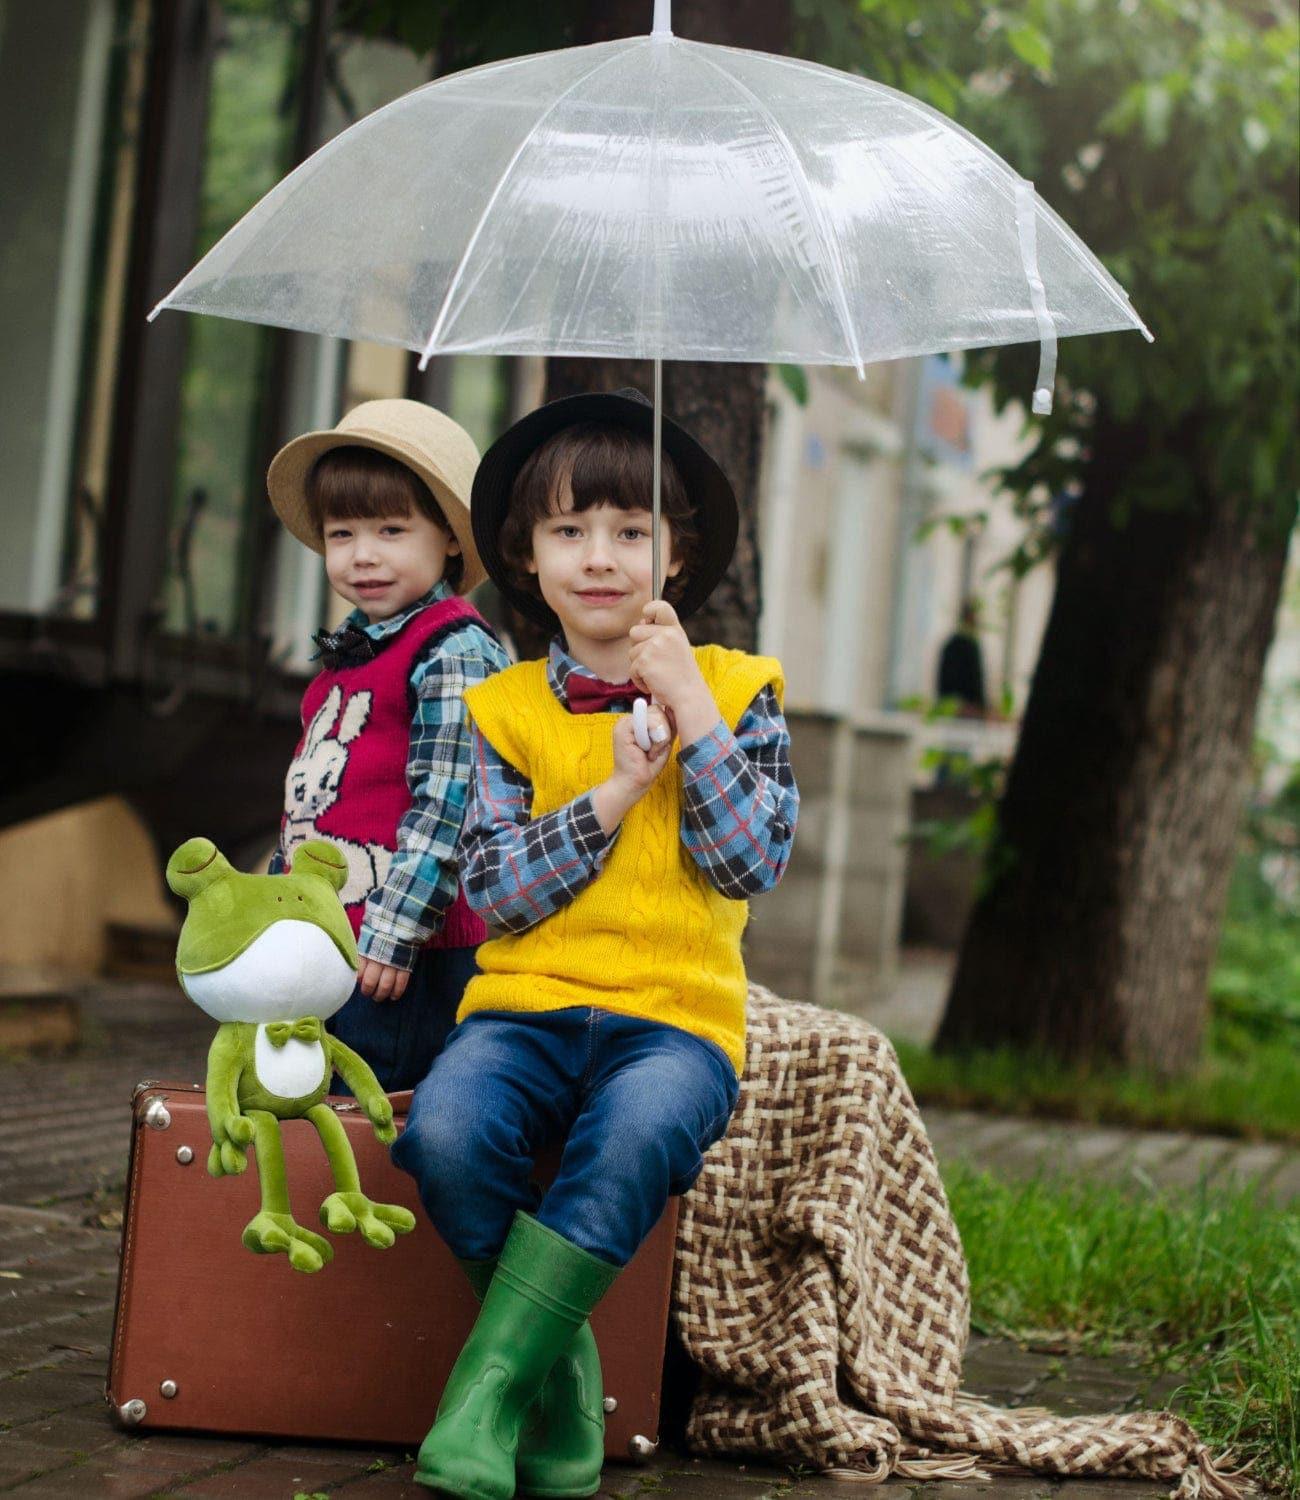 ☔ Kids sharing joyful umbrella moments with their beloved Frog Plush Friend.